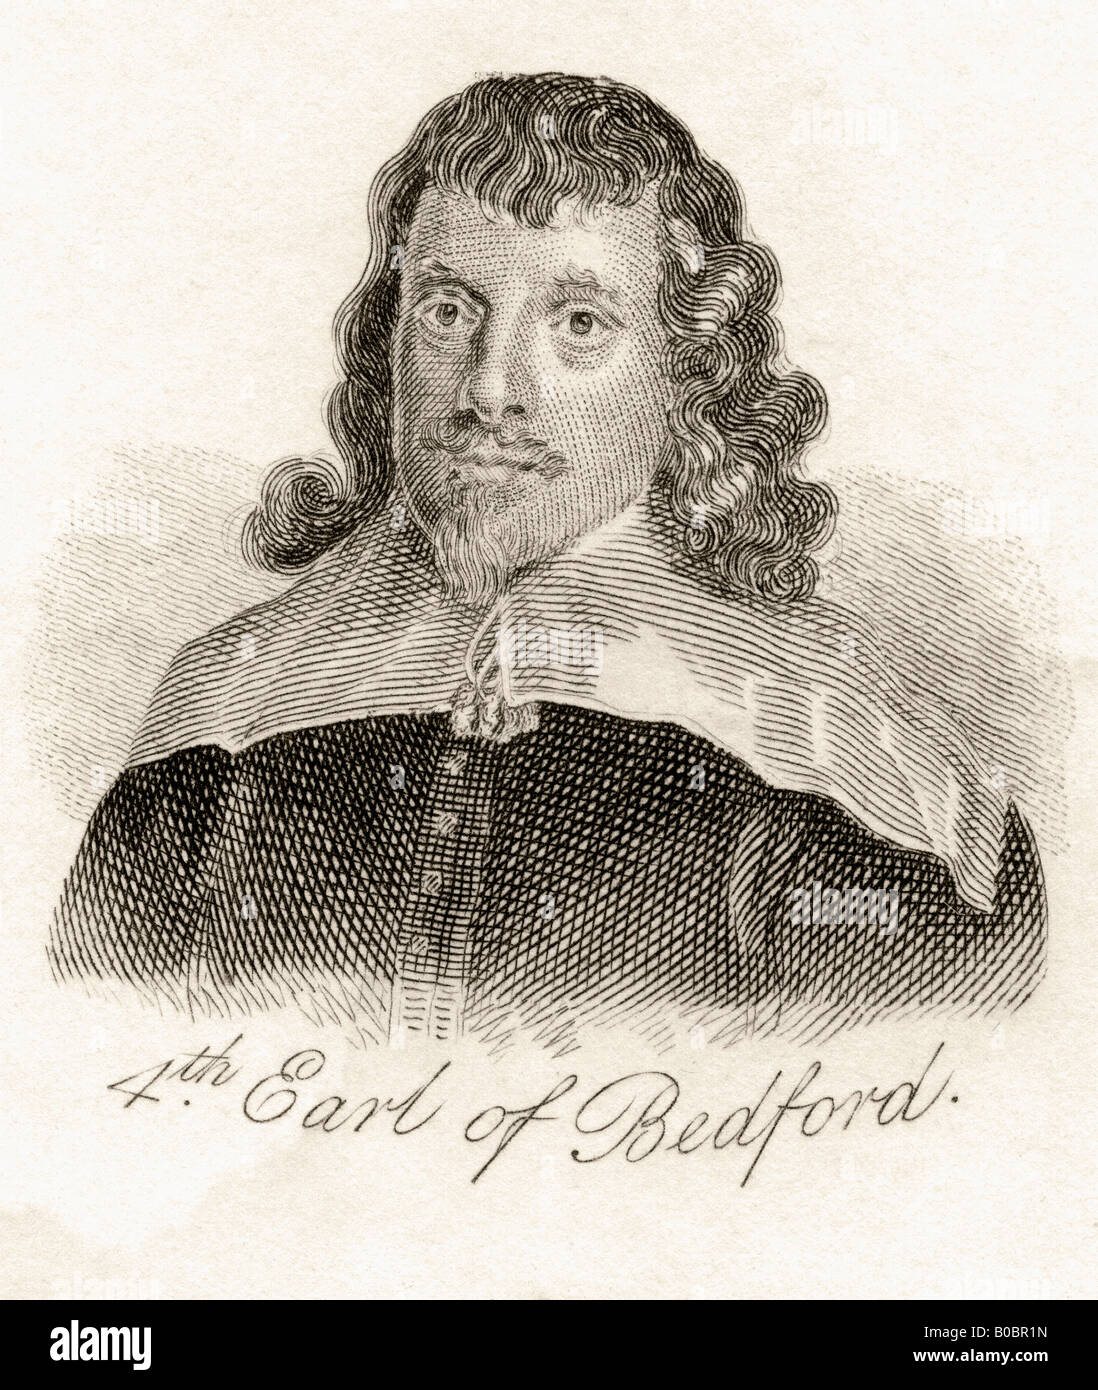 Francis Russell, 4th Earl of Bedford, 1593 -1641. Englischer Adliger. Aus dem Buch Crabbs Historical Dictionary, veröffentlicht 1825. Stockfoto